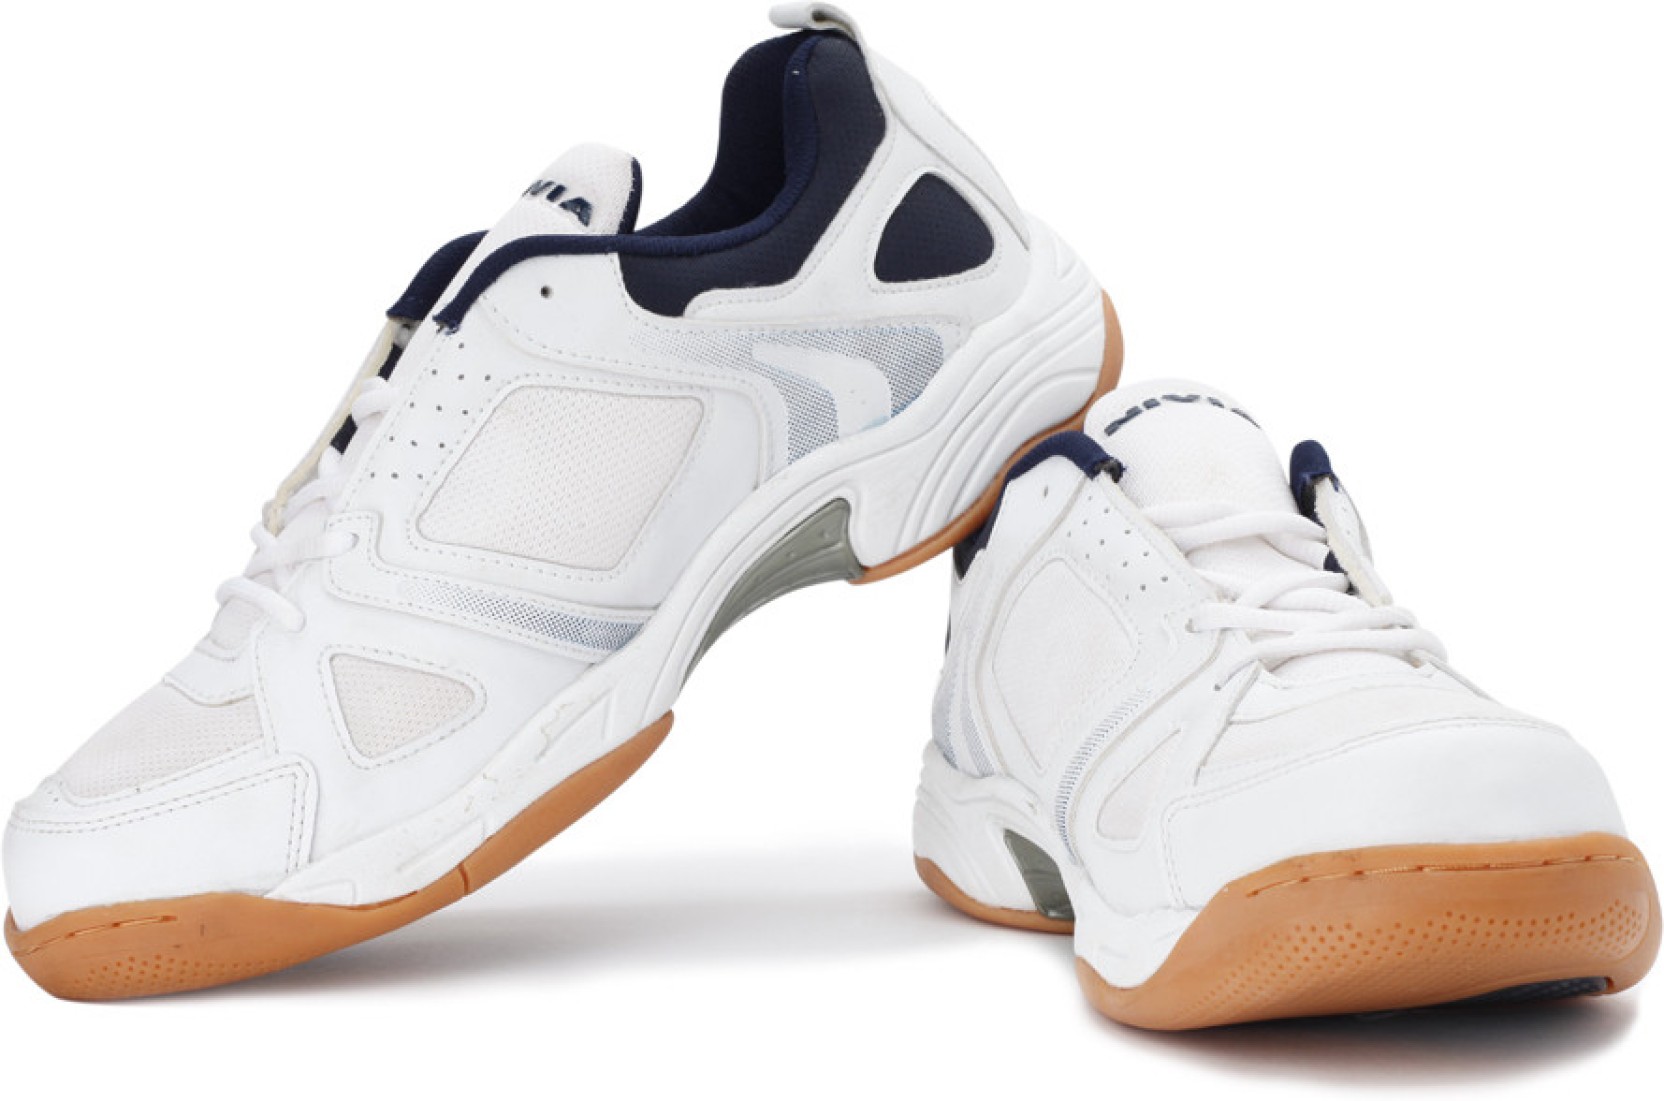 Nivia New Verdict Tennis Shoes - Buy White, Black Color Nivia New ...